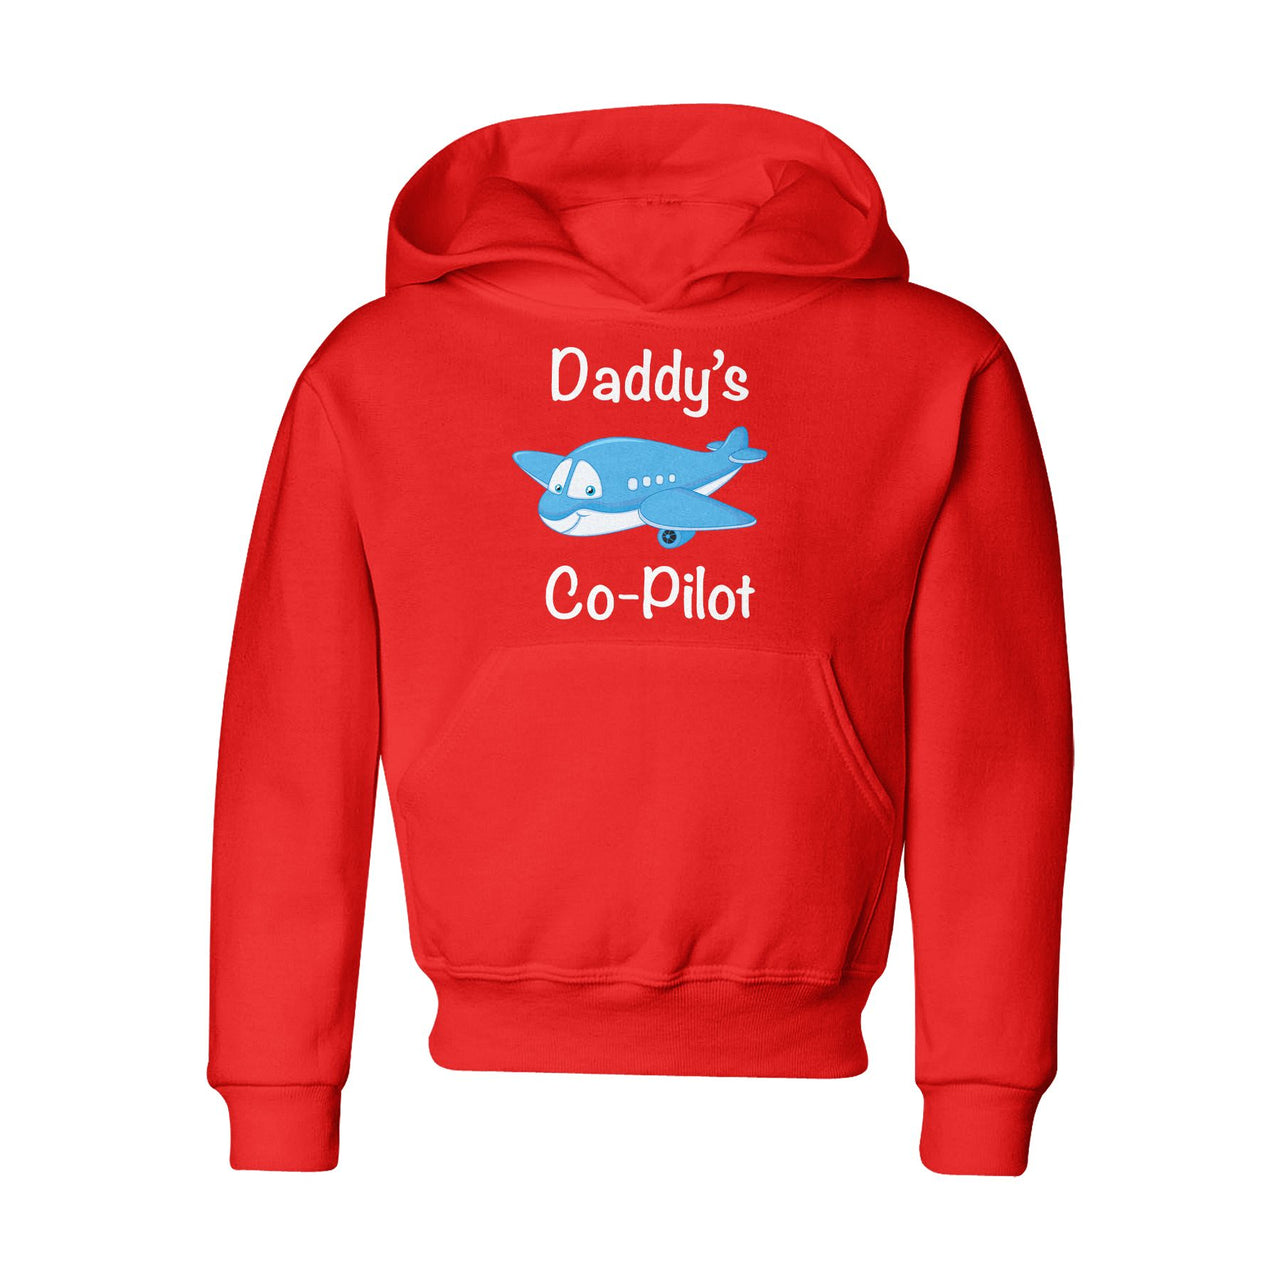 Daddy's Co-Pilot (Jet Airplane) Designed "CHILDREN" Hoodies